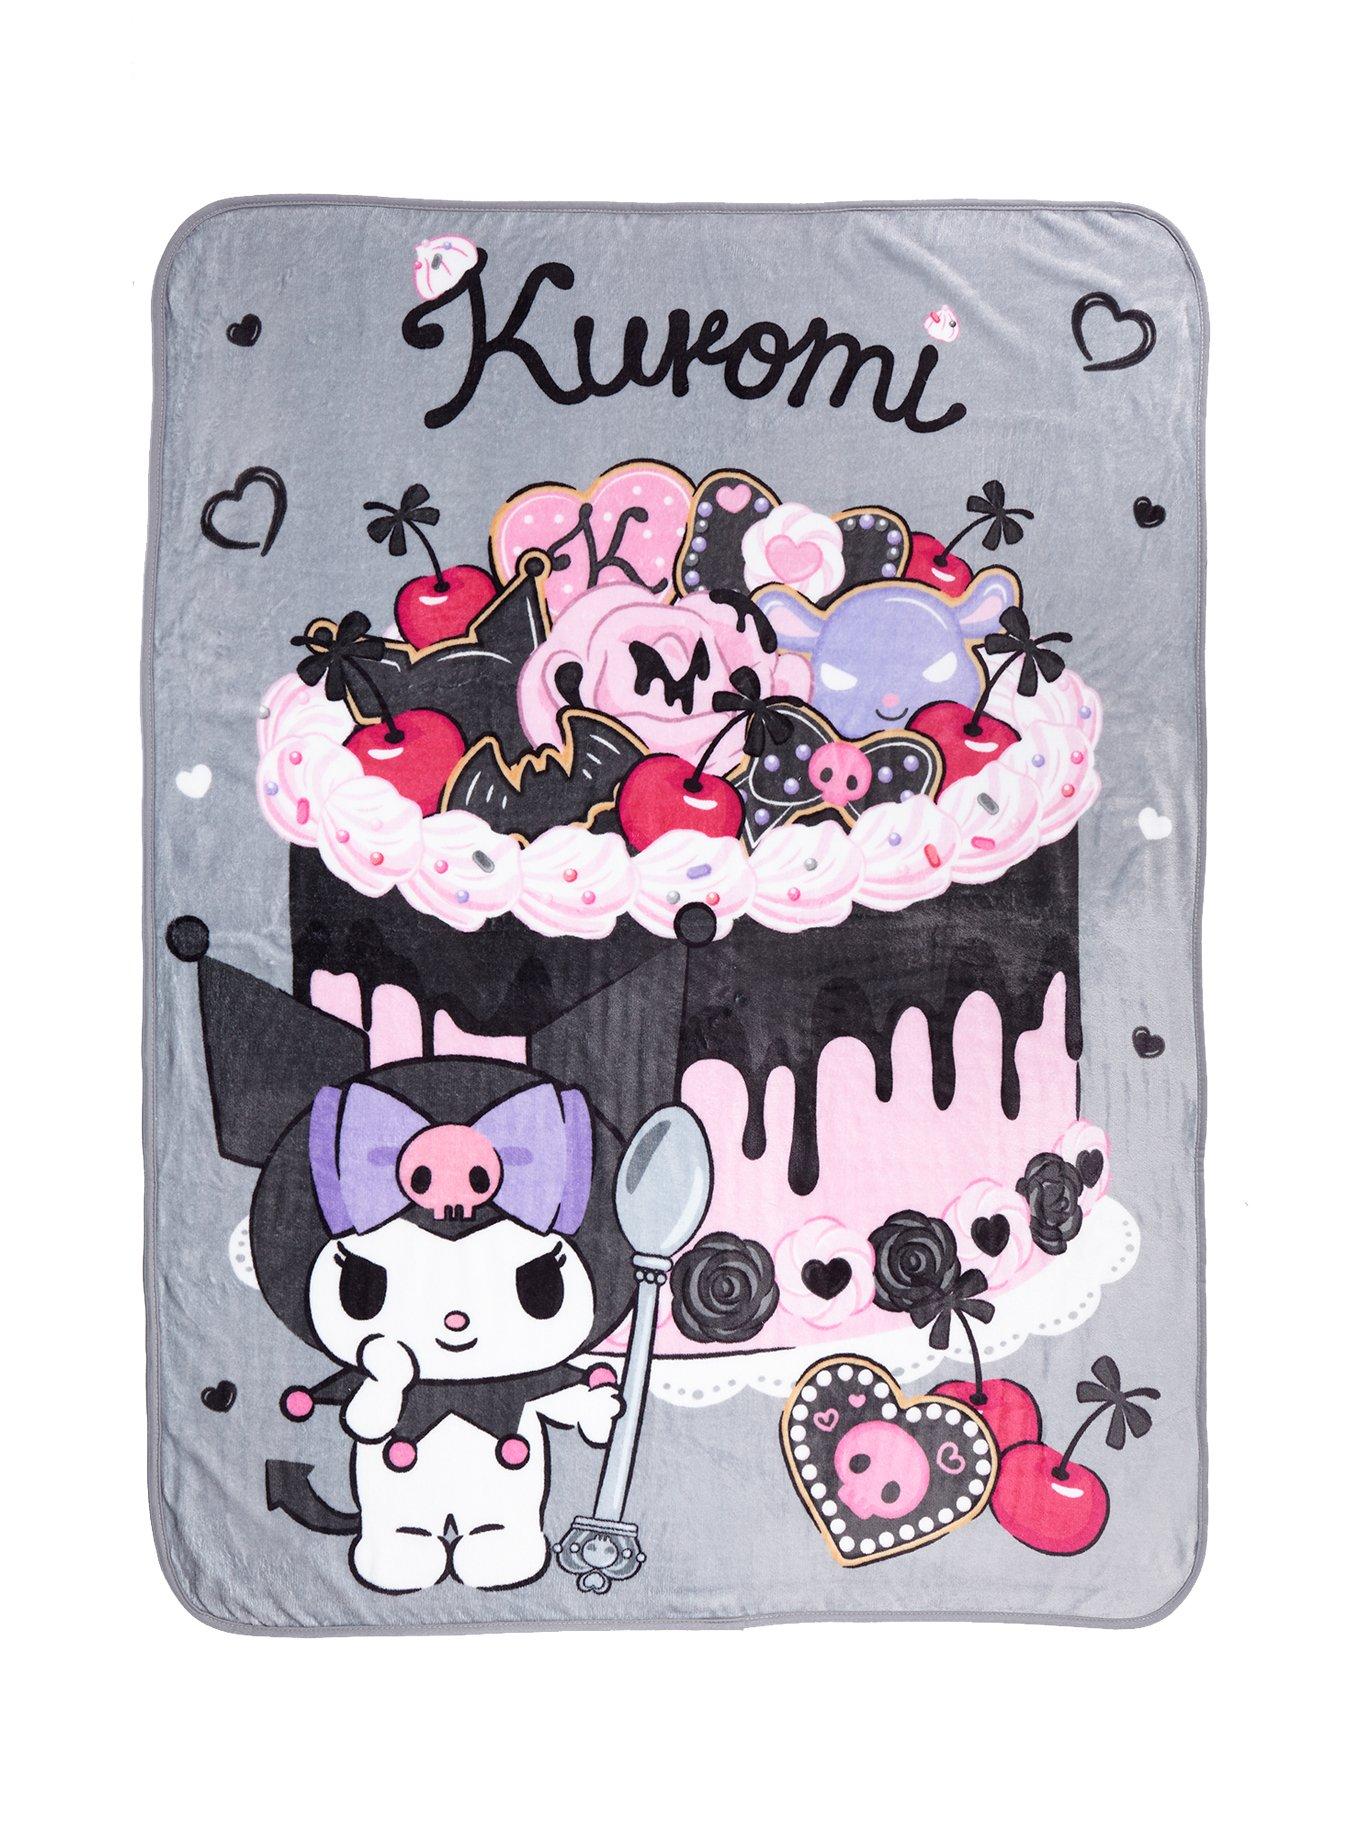 Kuromi Cake Throw Blanket